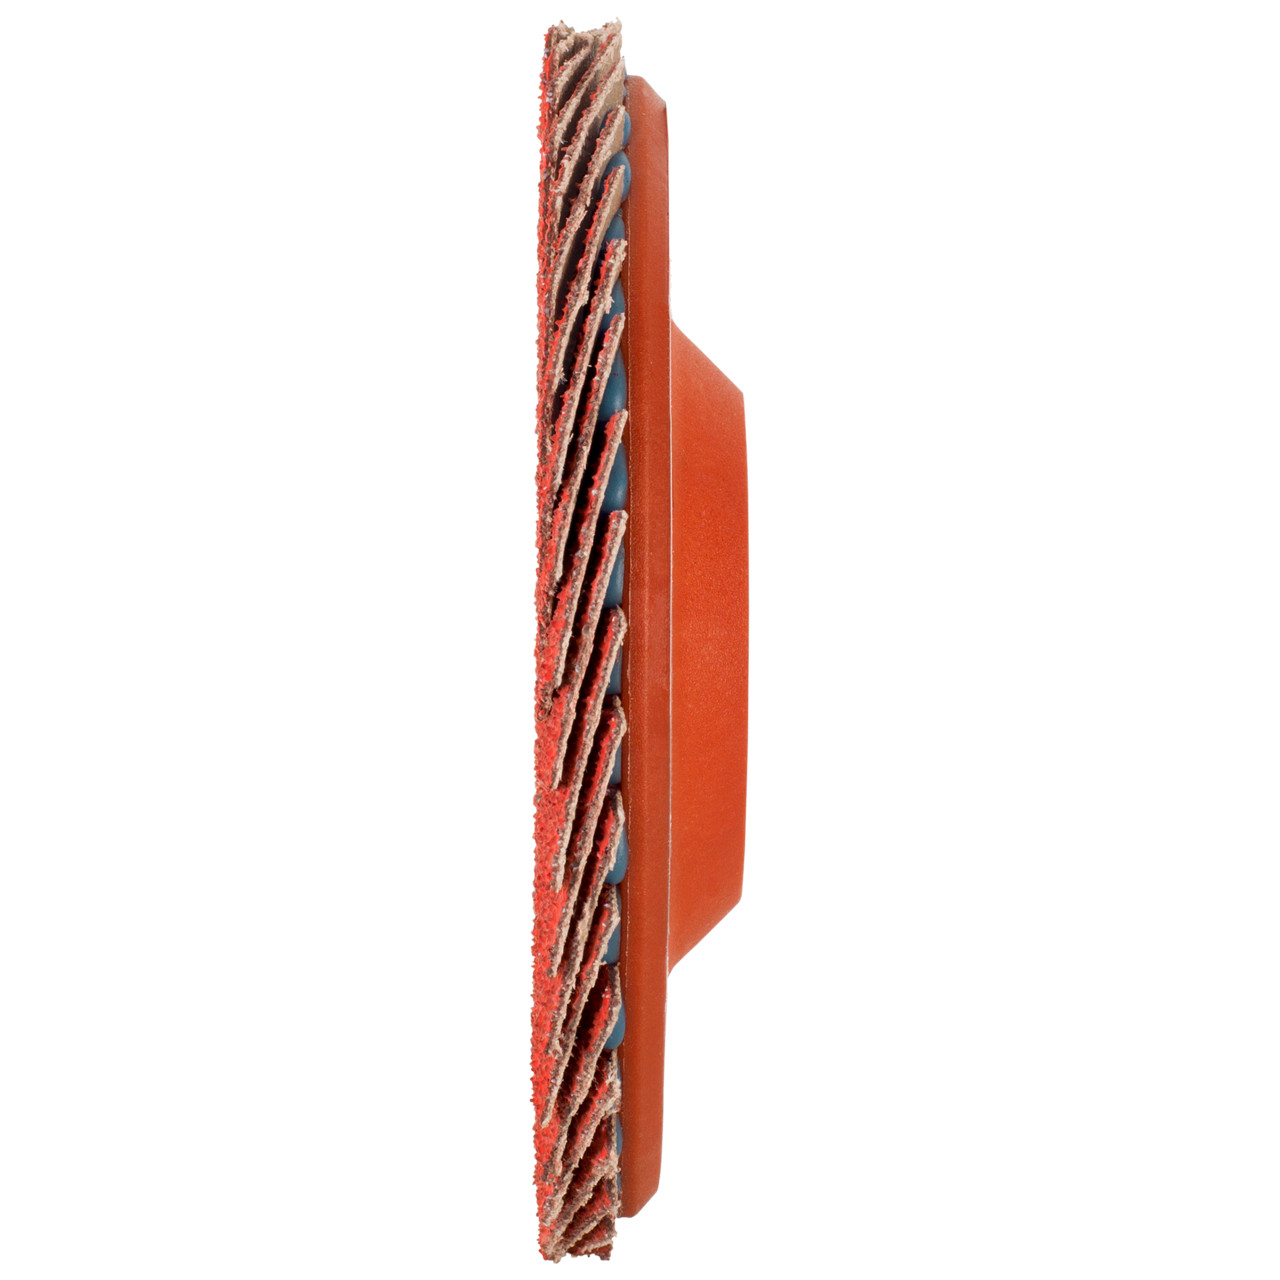 Tyrolit Serrated lock washer DxH 125x22.23 CERAMIC for stainless steel, P40, shape: 28N - straight version (plastic carrier body), Art. 719846